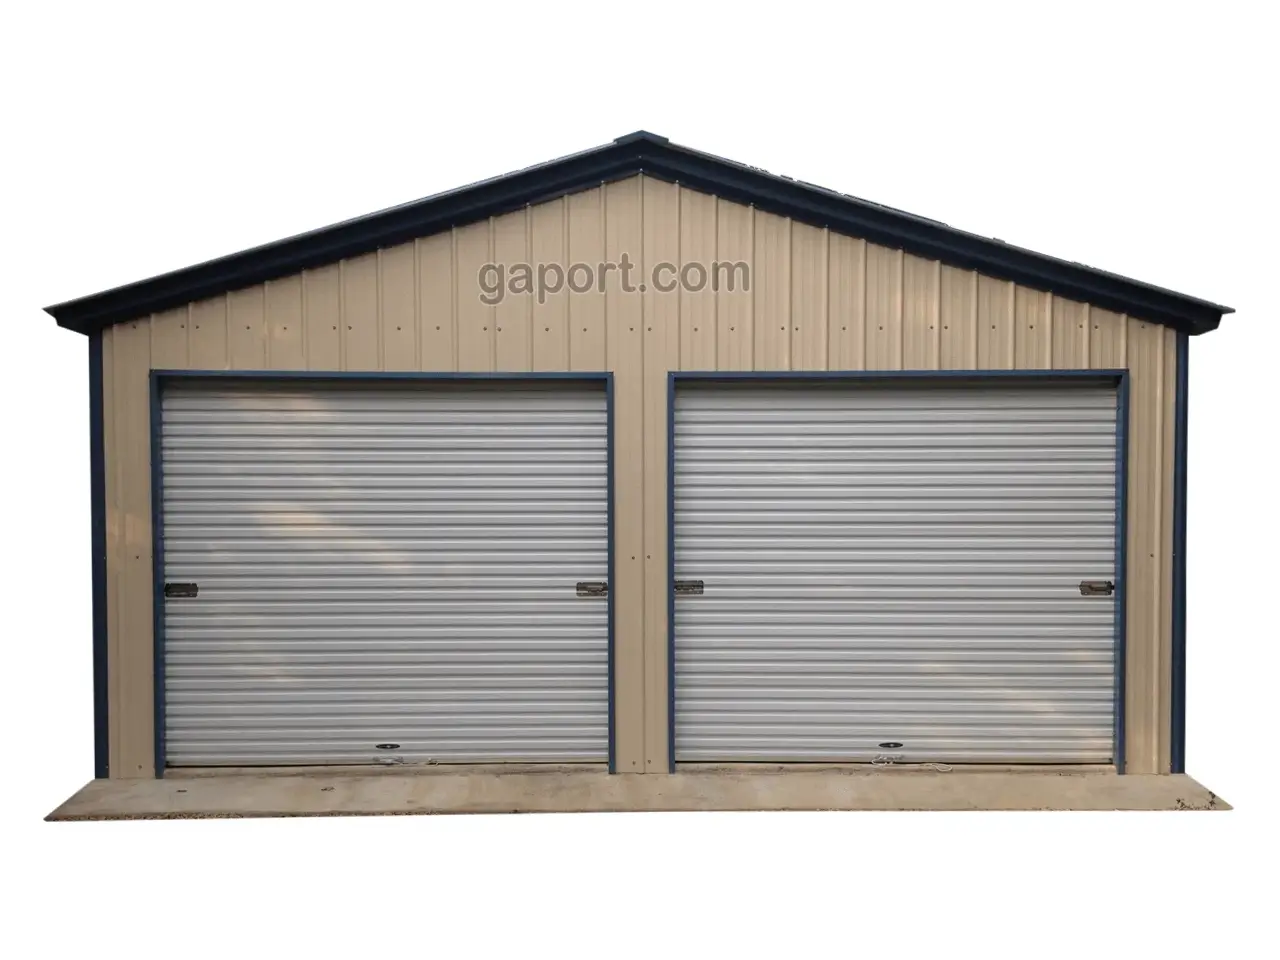 image illustrating two car metal garage building with beige vertical siding